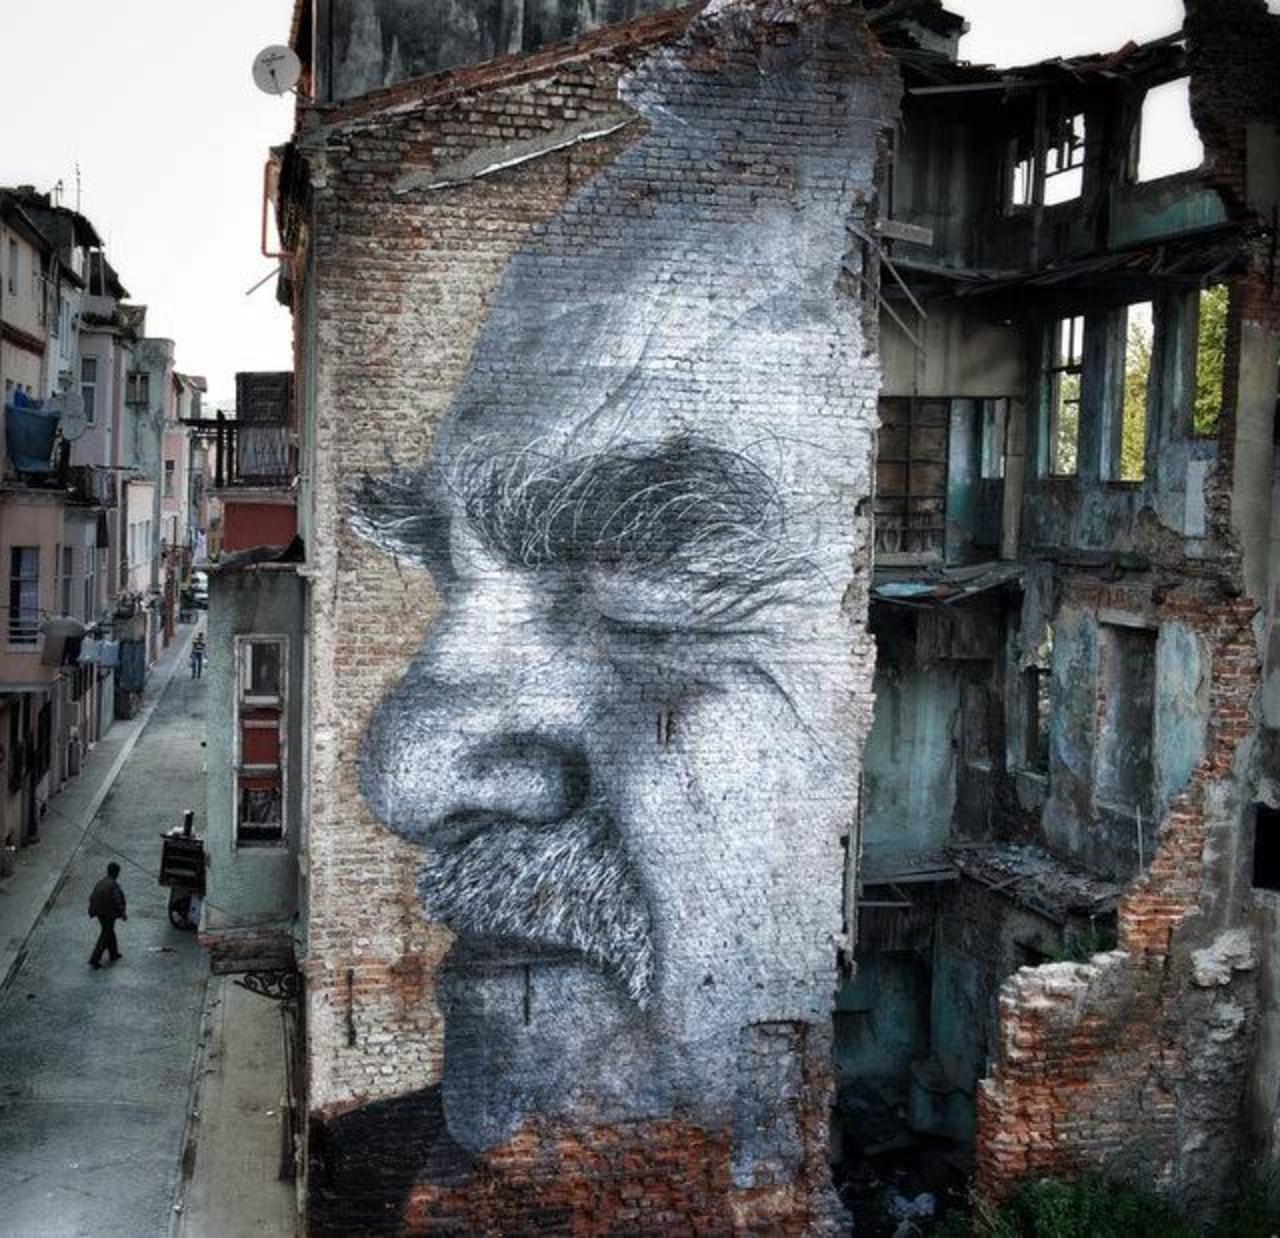 Street Art by JR in Istanbul & after local police painted over it 

#art #arte #graffiti #streetart http://t.co/Yn1rTYF4Dv